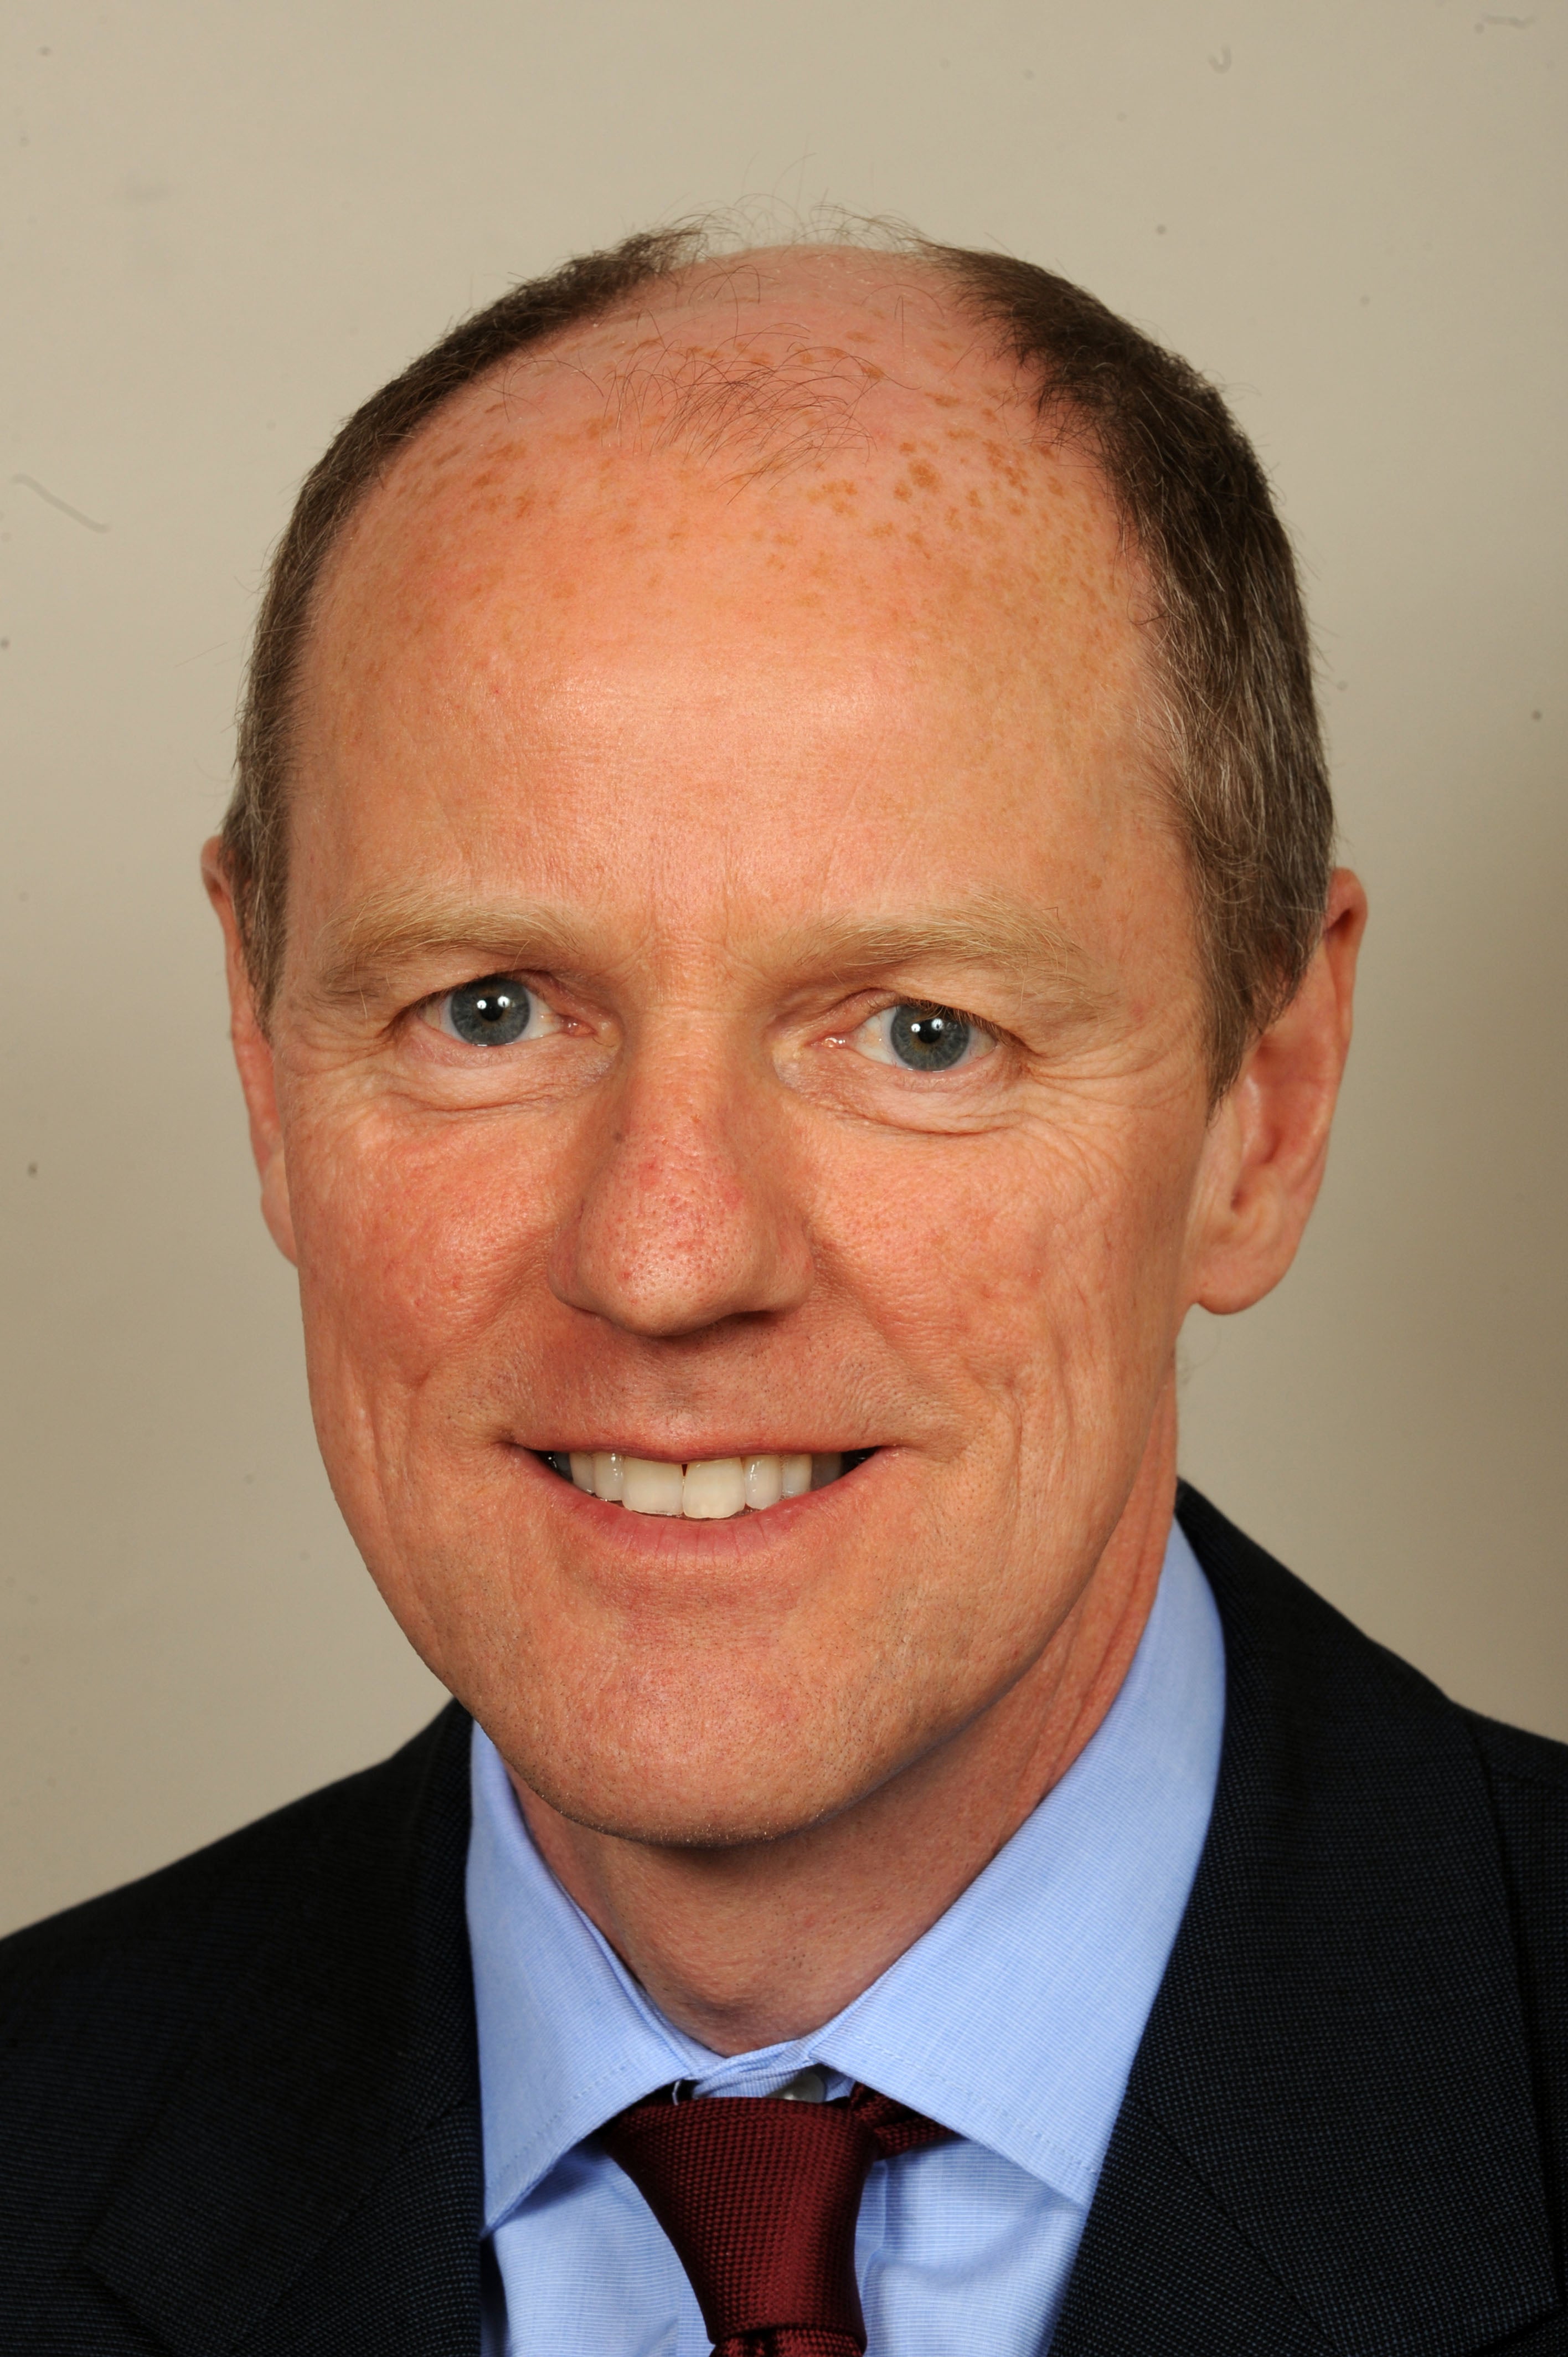 Nick Gibb, Conservative MP for Bognor Regis and Littlehampton (Ian Nicholson/PA)